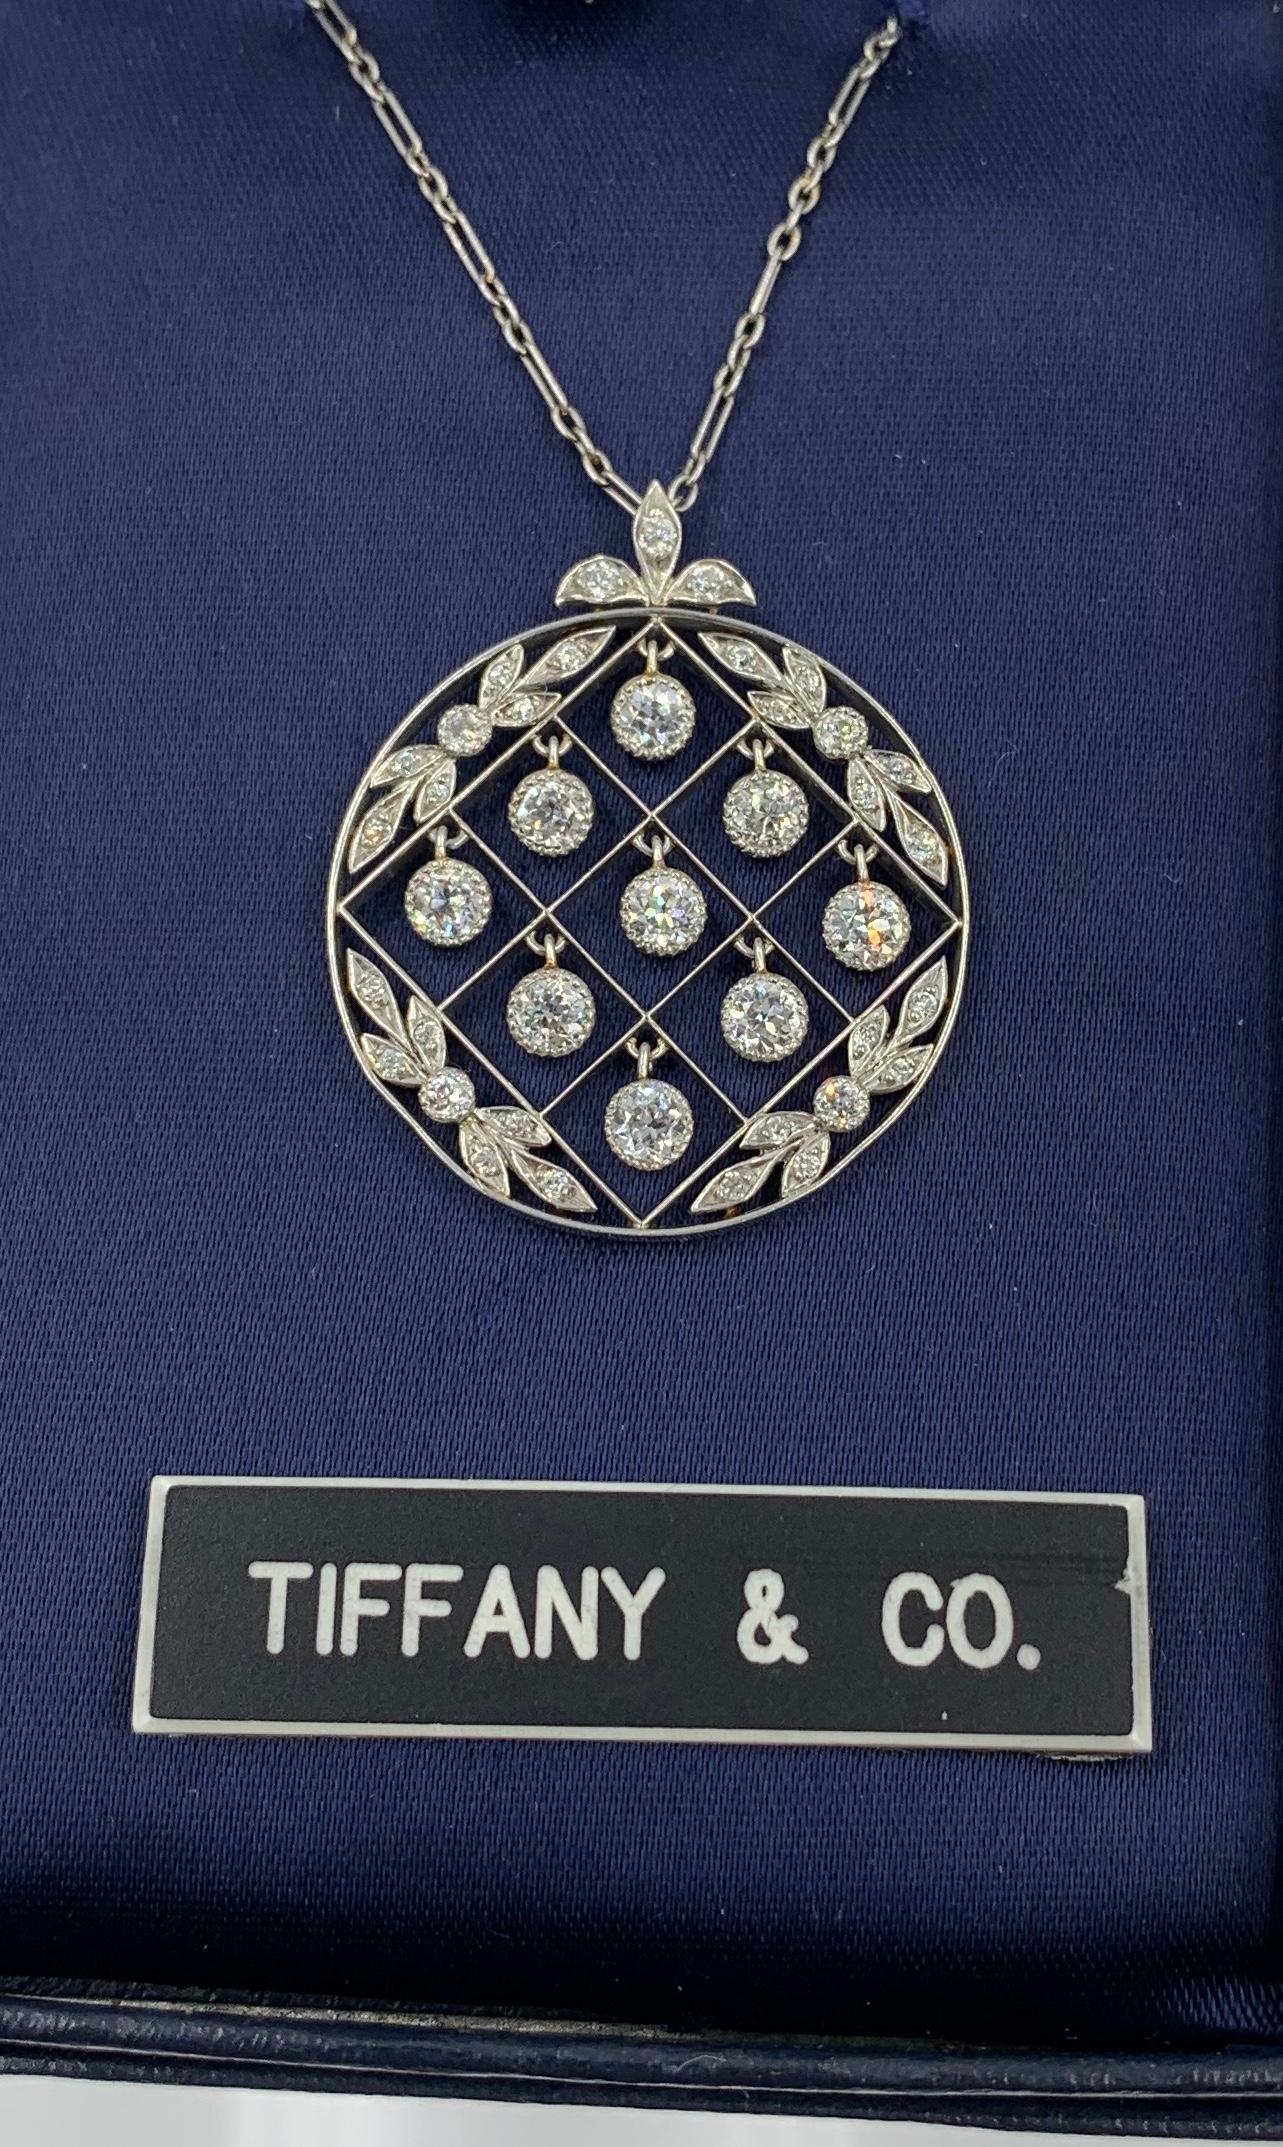 tiffany two carat pendant